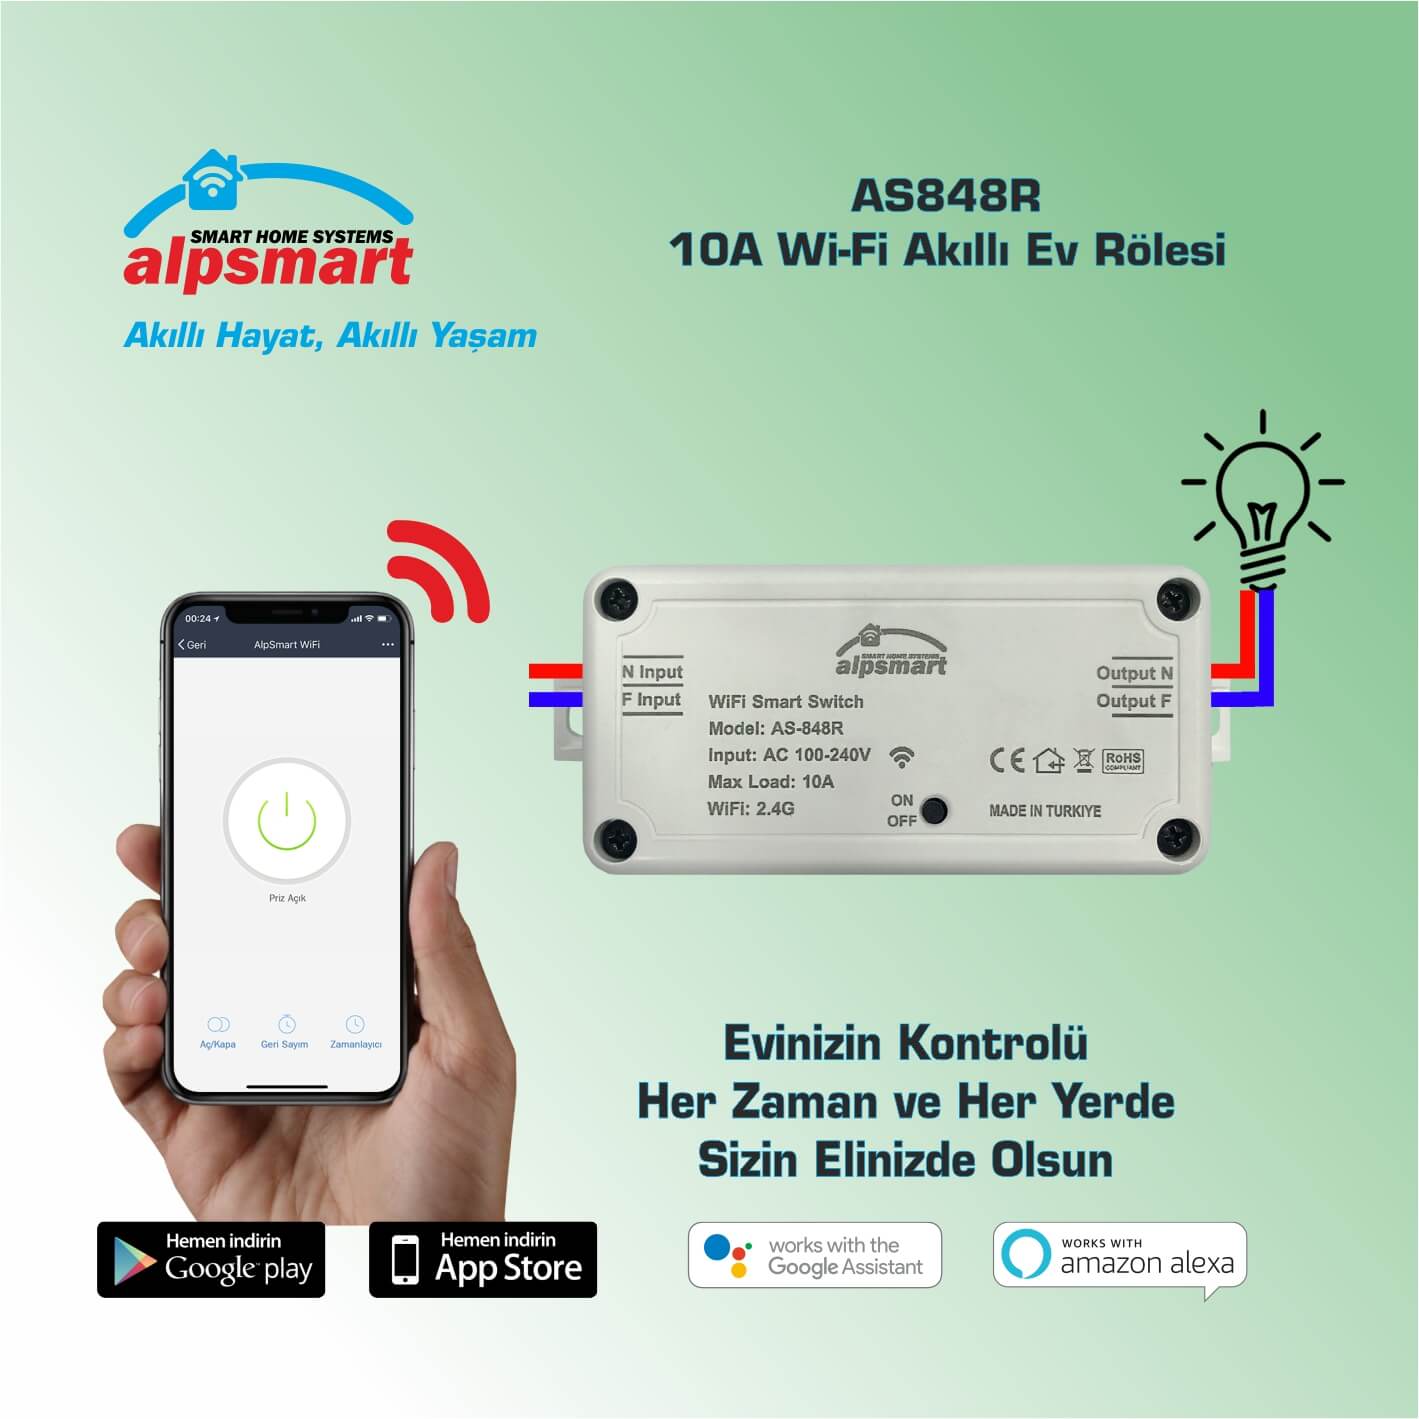 Alpsmart As848R 10A Akıllı Wi-Fi Ev Rölesi